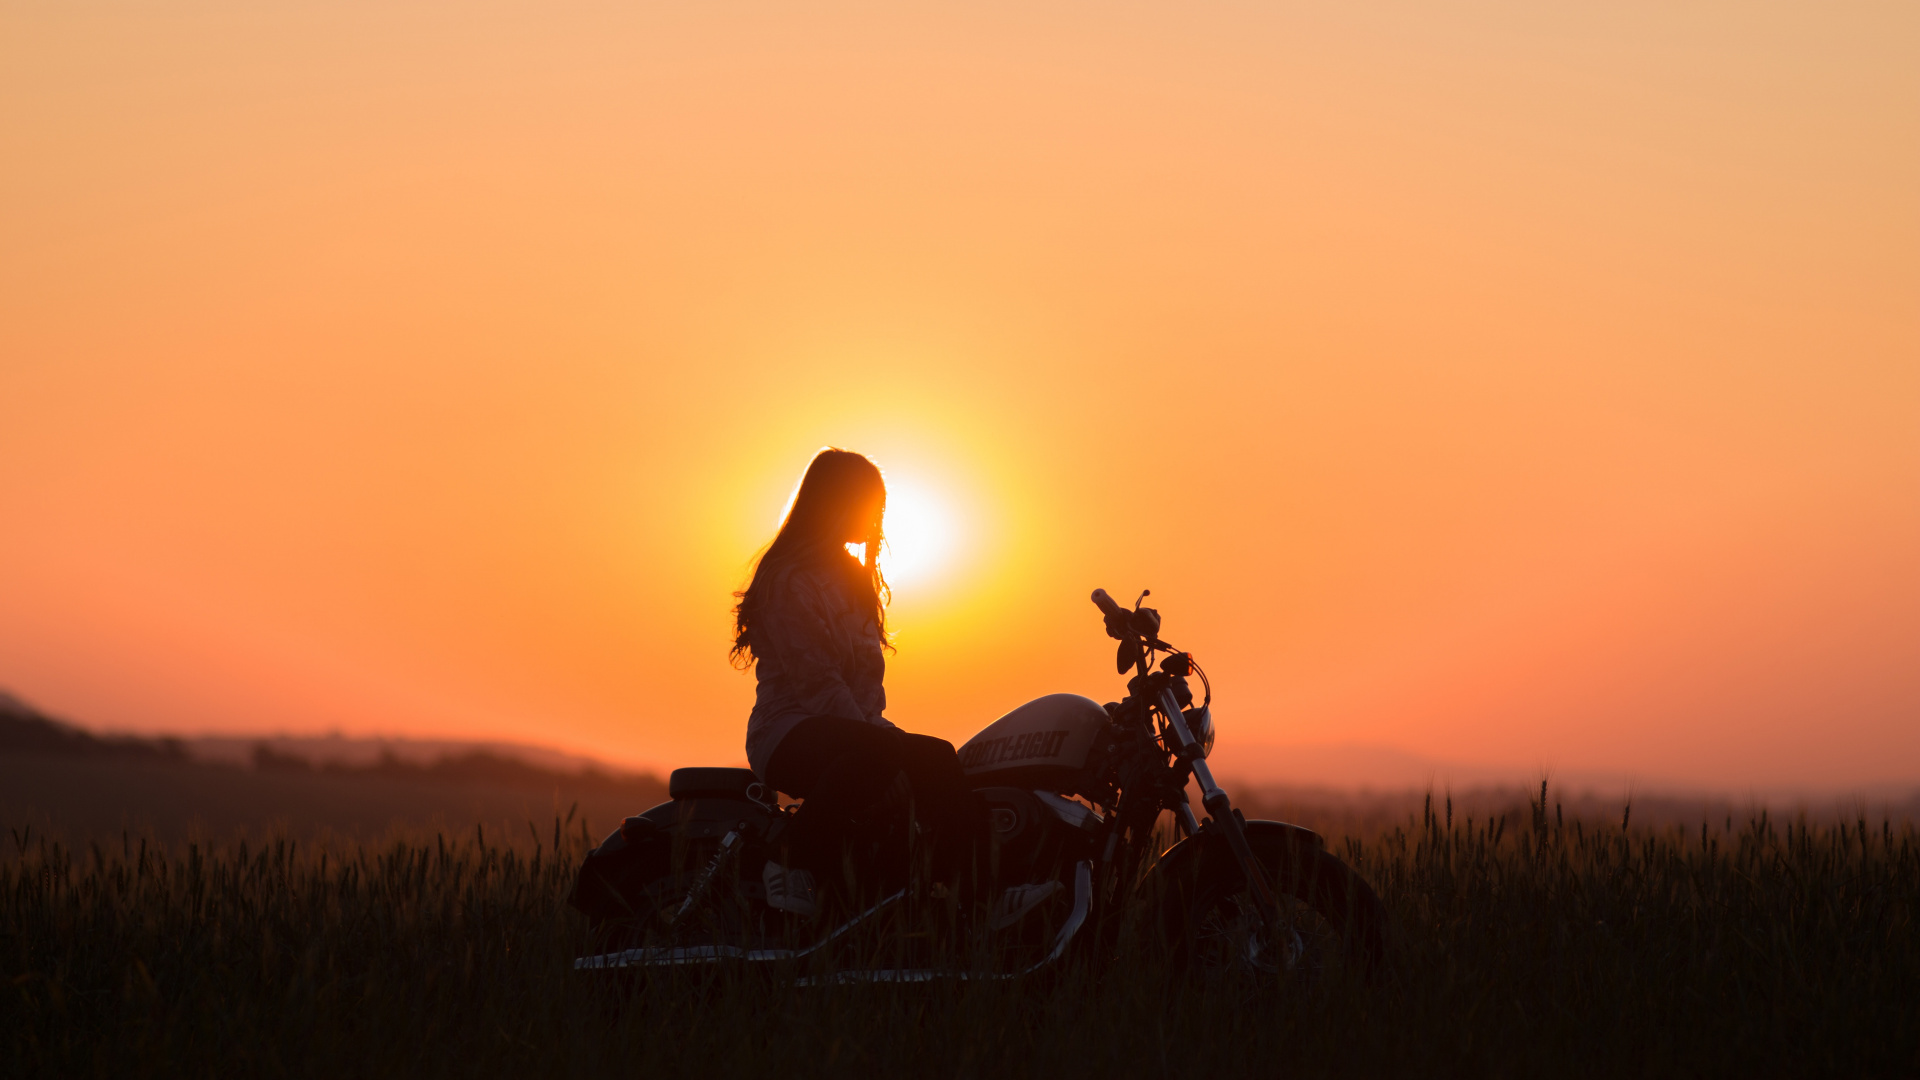 Обои мотоцикл, восход солнца, закат, солнце, утро в разрешении 1920x1080